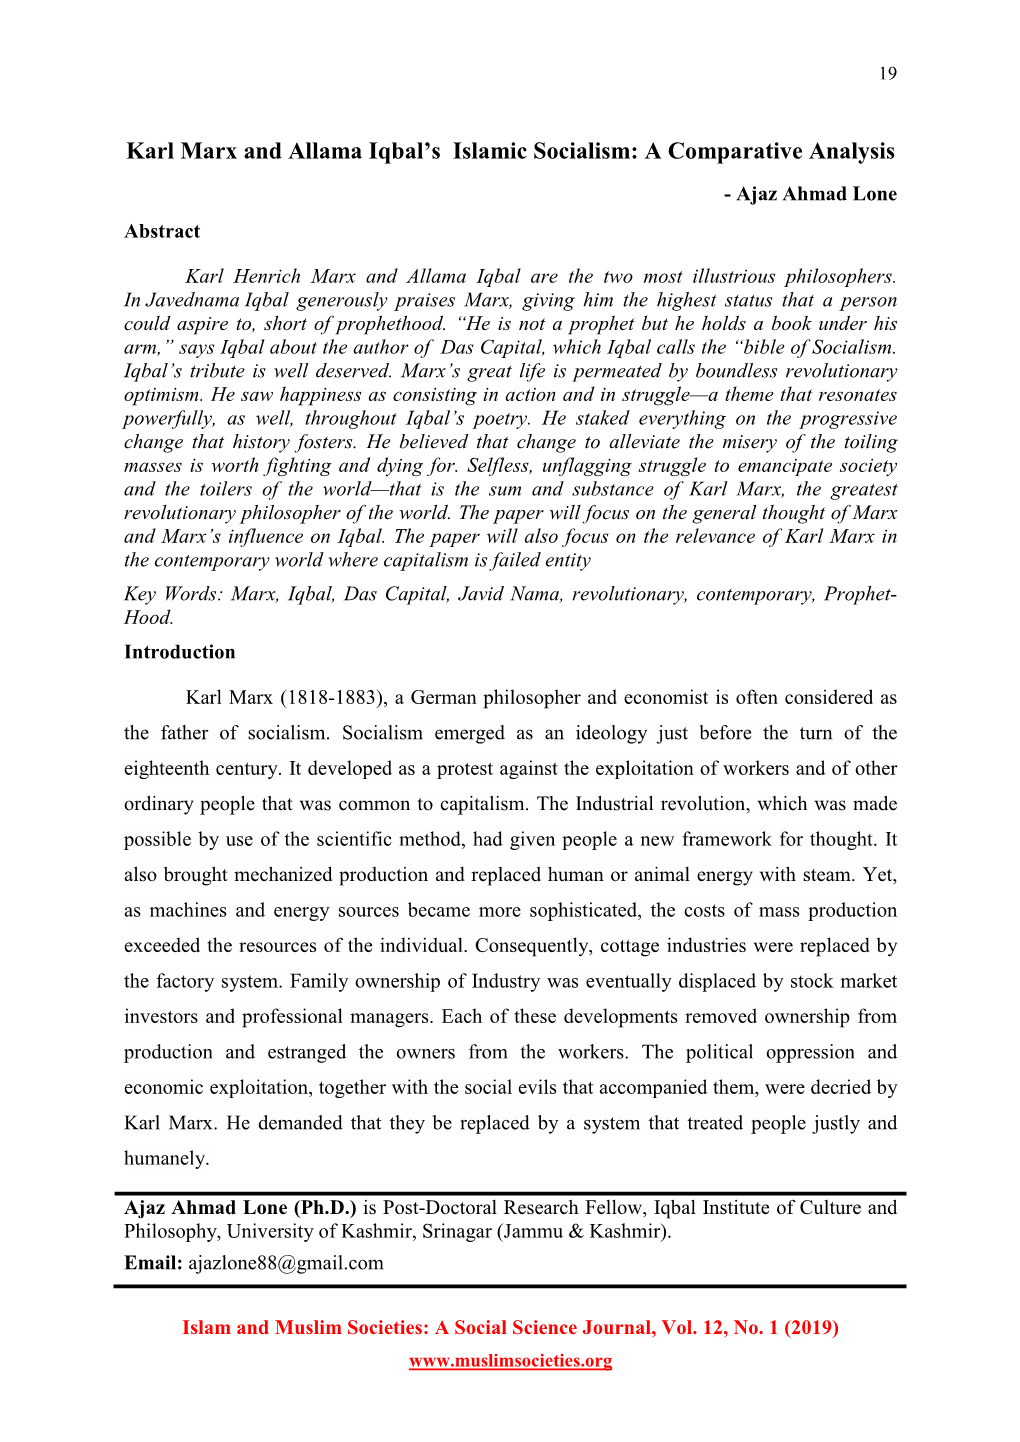 Karl Marx and Allama Iqbal's Islamic Socialism: a Comparative Analysis